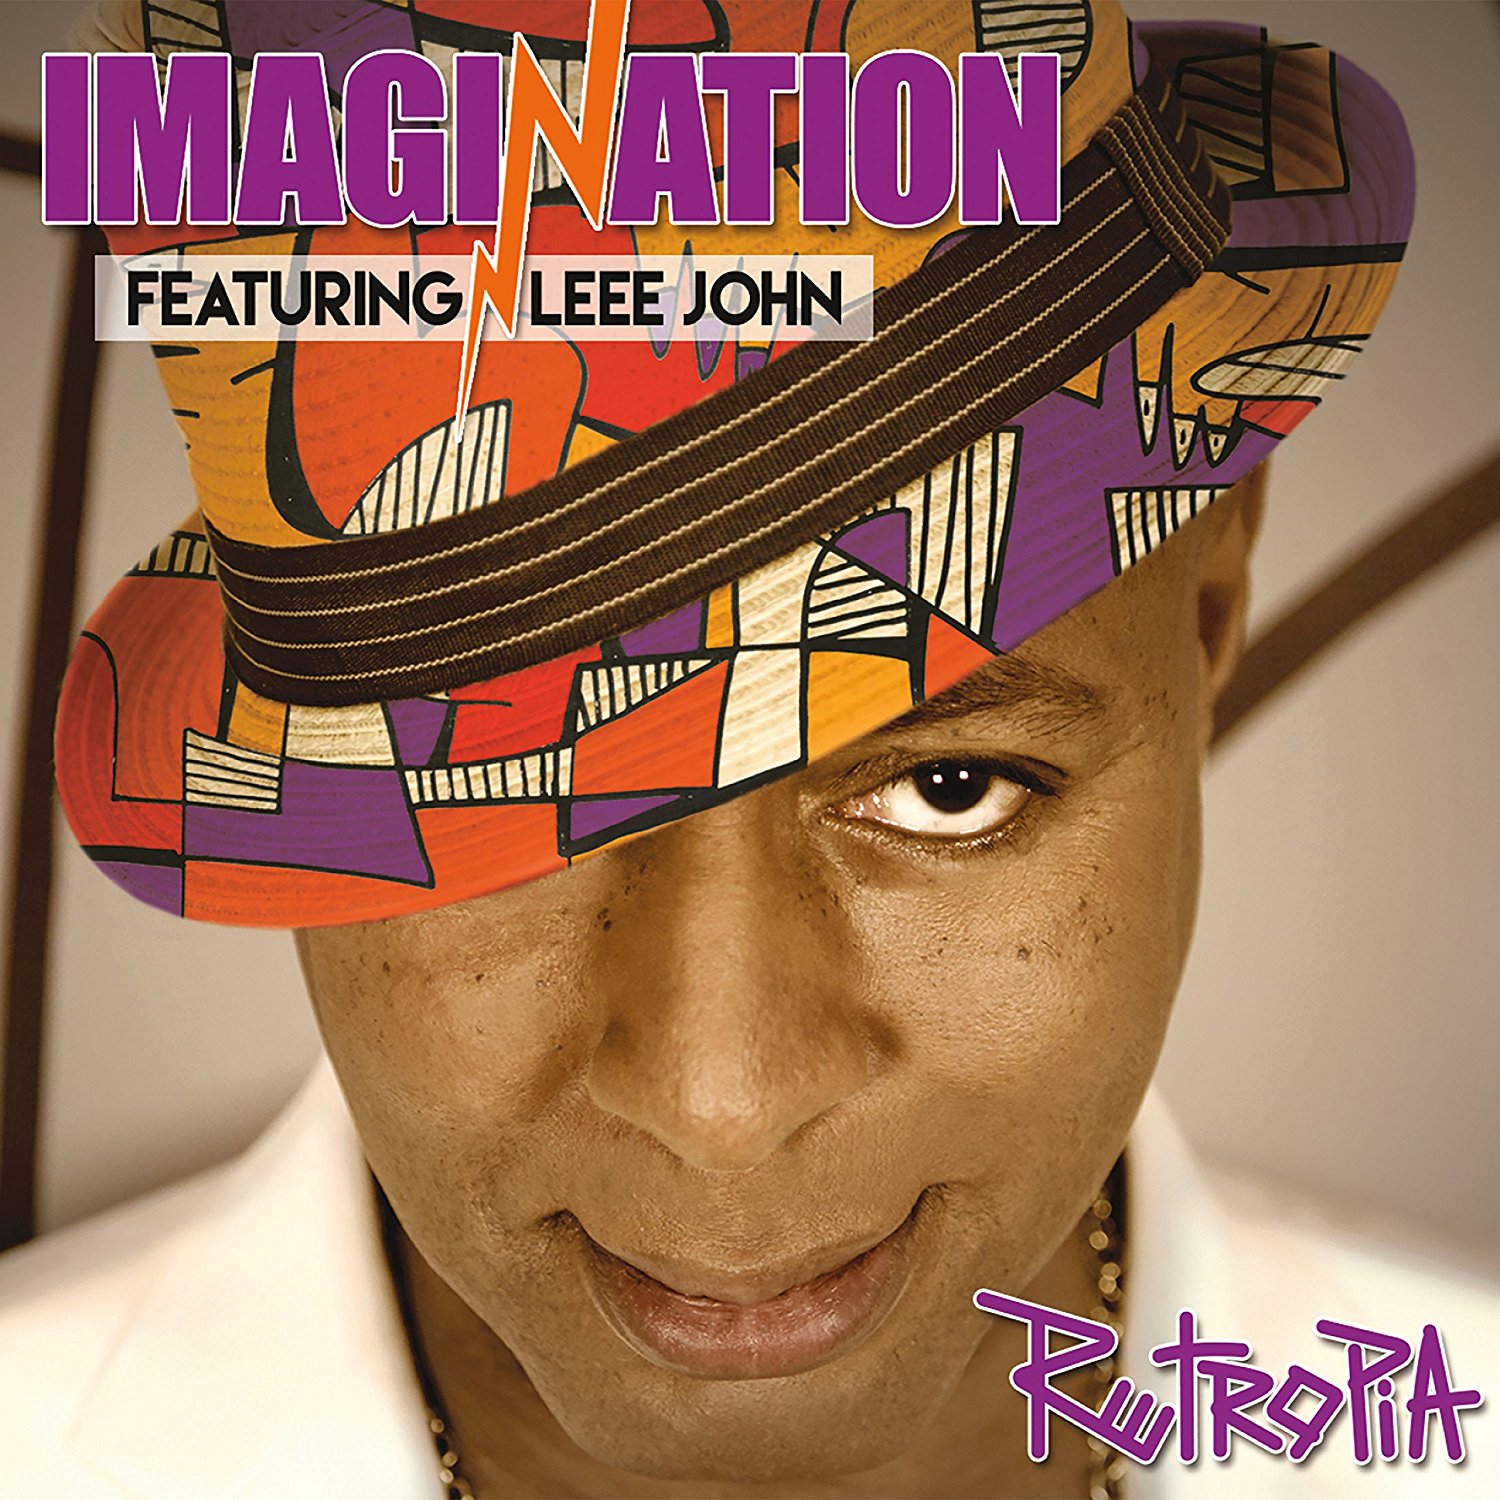 Imagination feat. Leee John. Группа imagination альбомы. Leee John певец. Imagination Lee John.